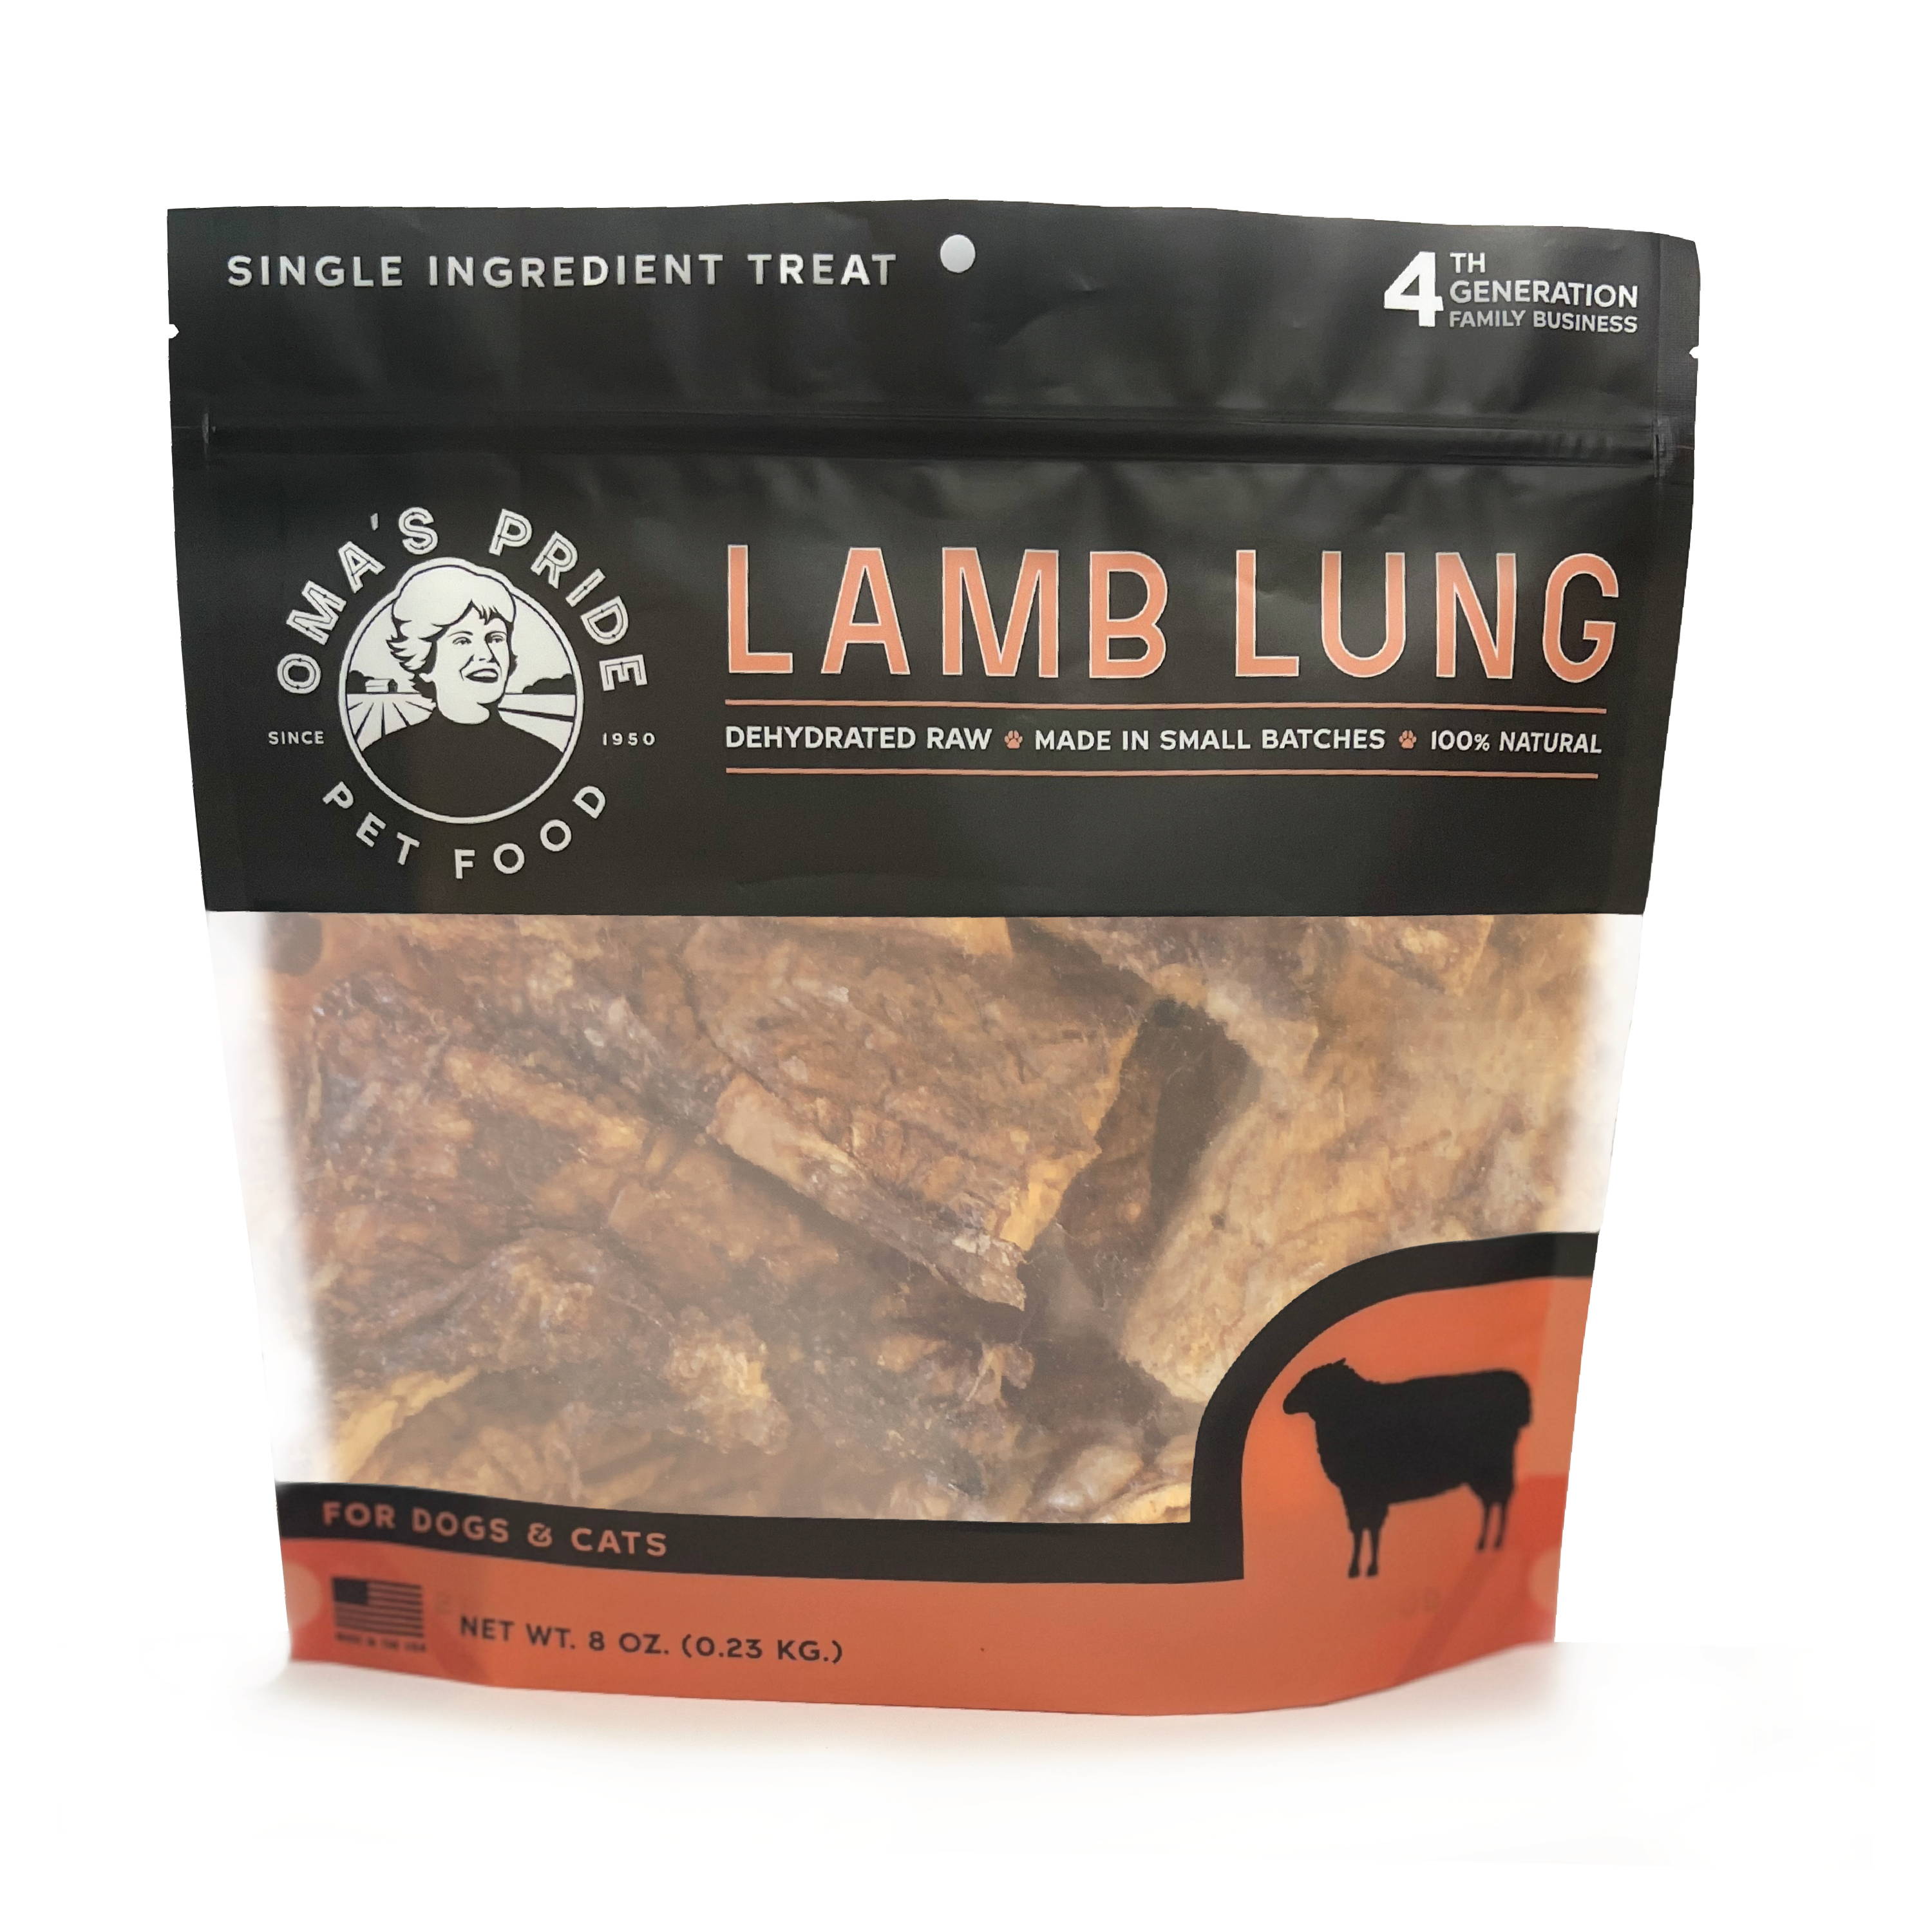 Oma's Pride 8 oz lamb lung product bag.